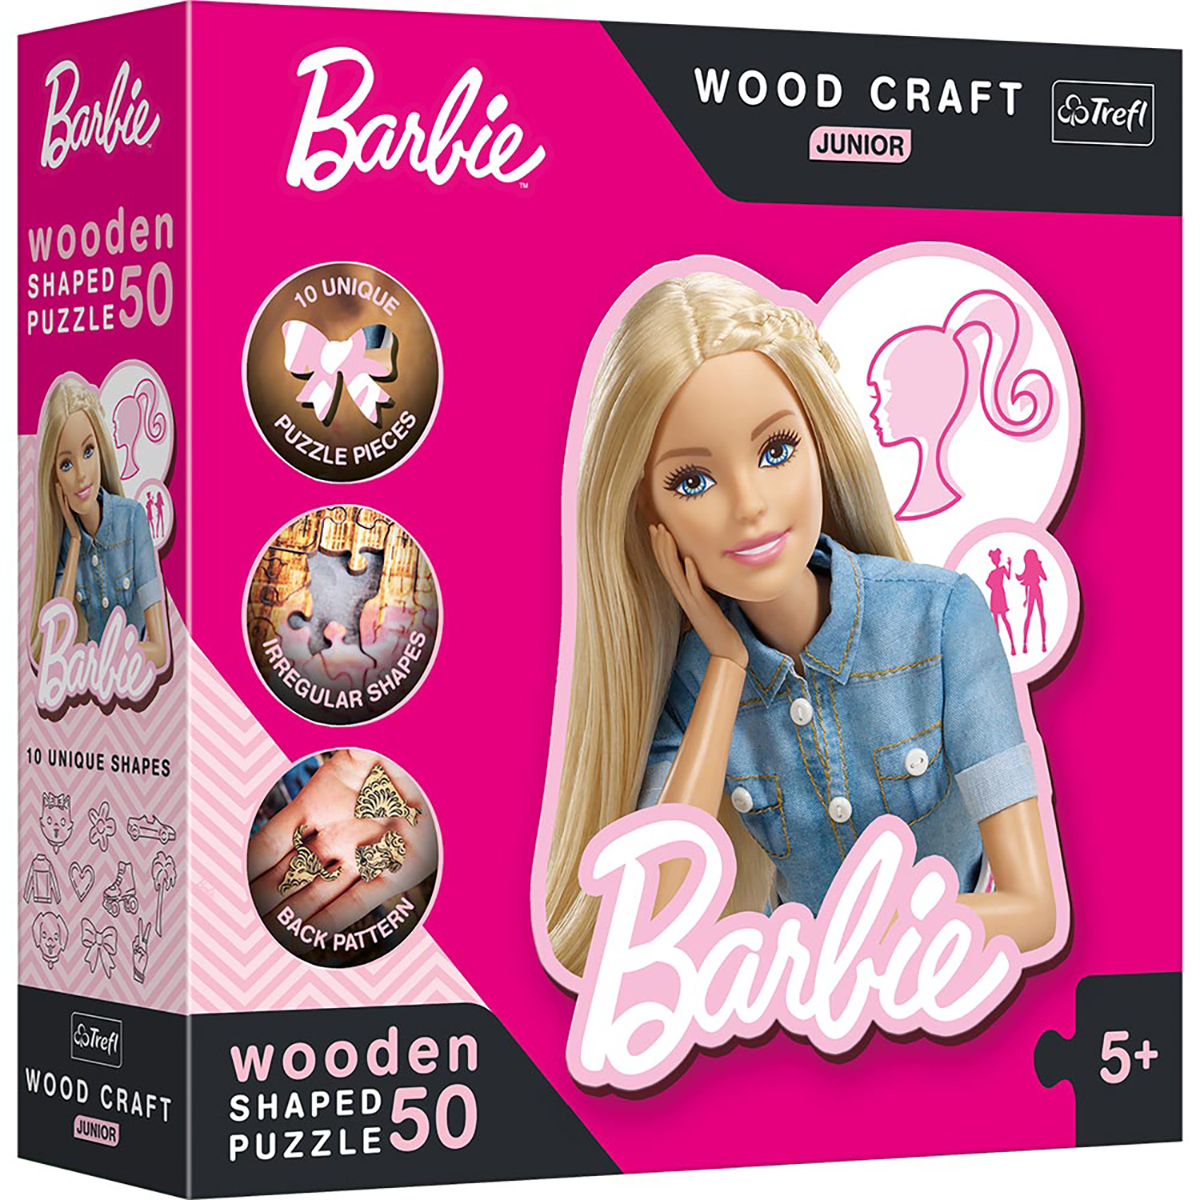 TREFL Holz Junior - Puzzle Form-Puzzle Teile) Barbie (50